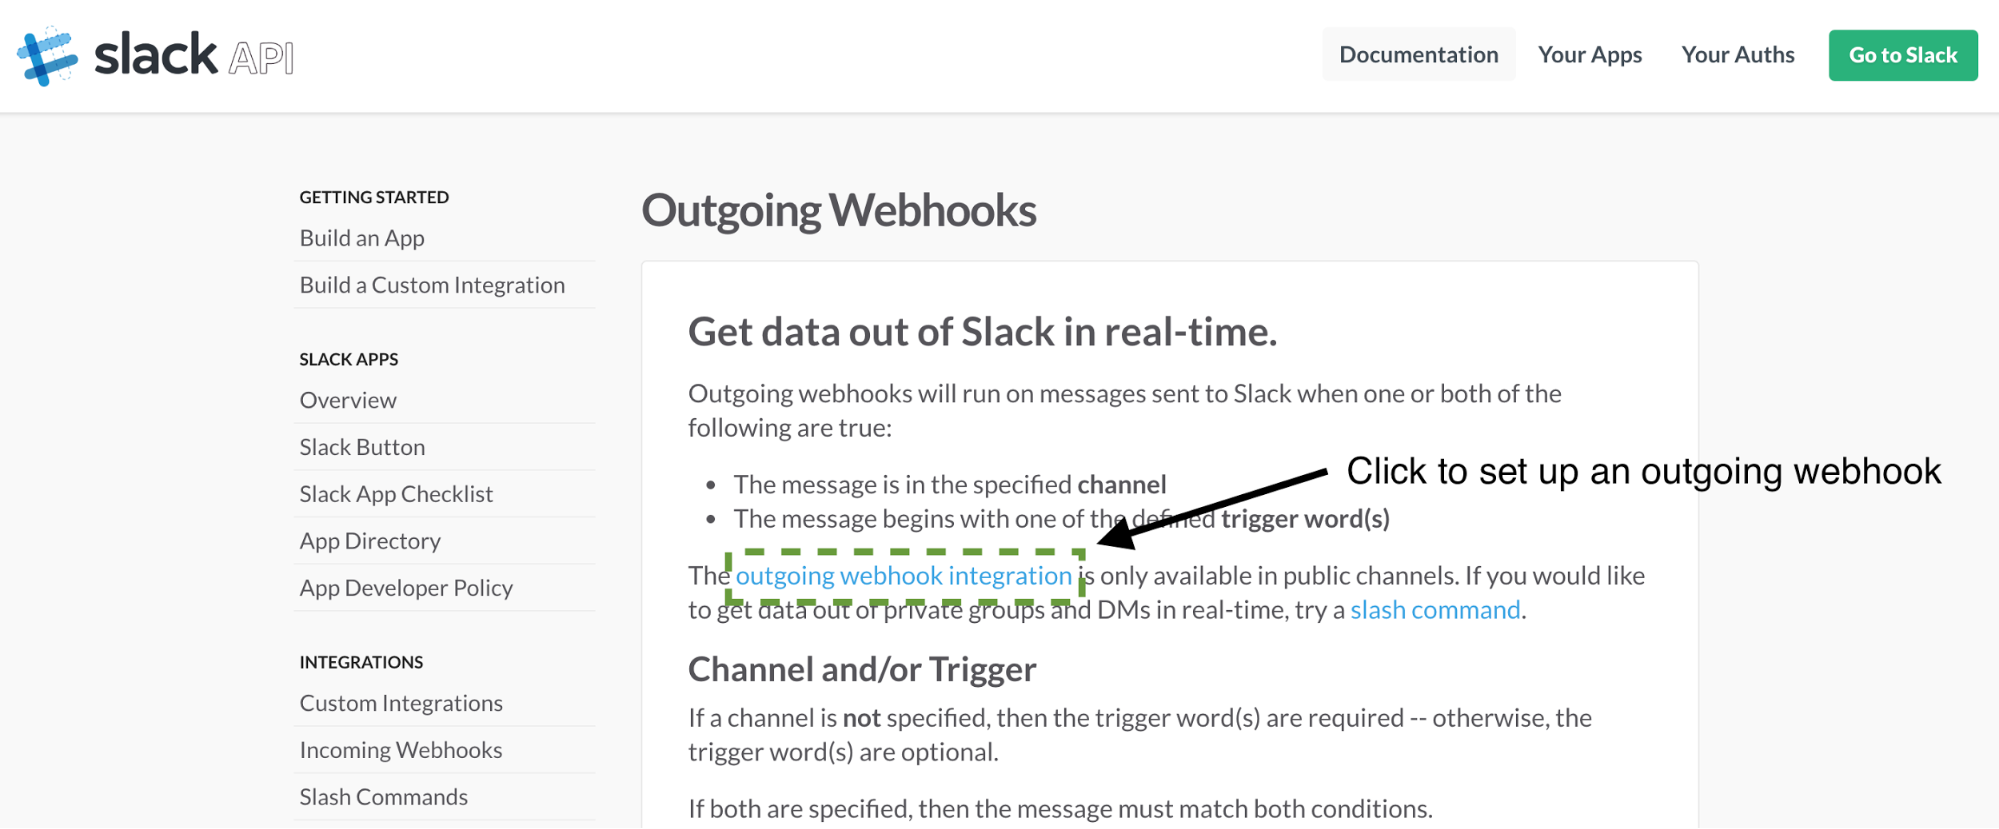 Slack Outgoing Webhooks